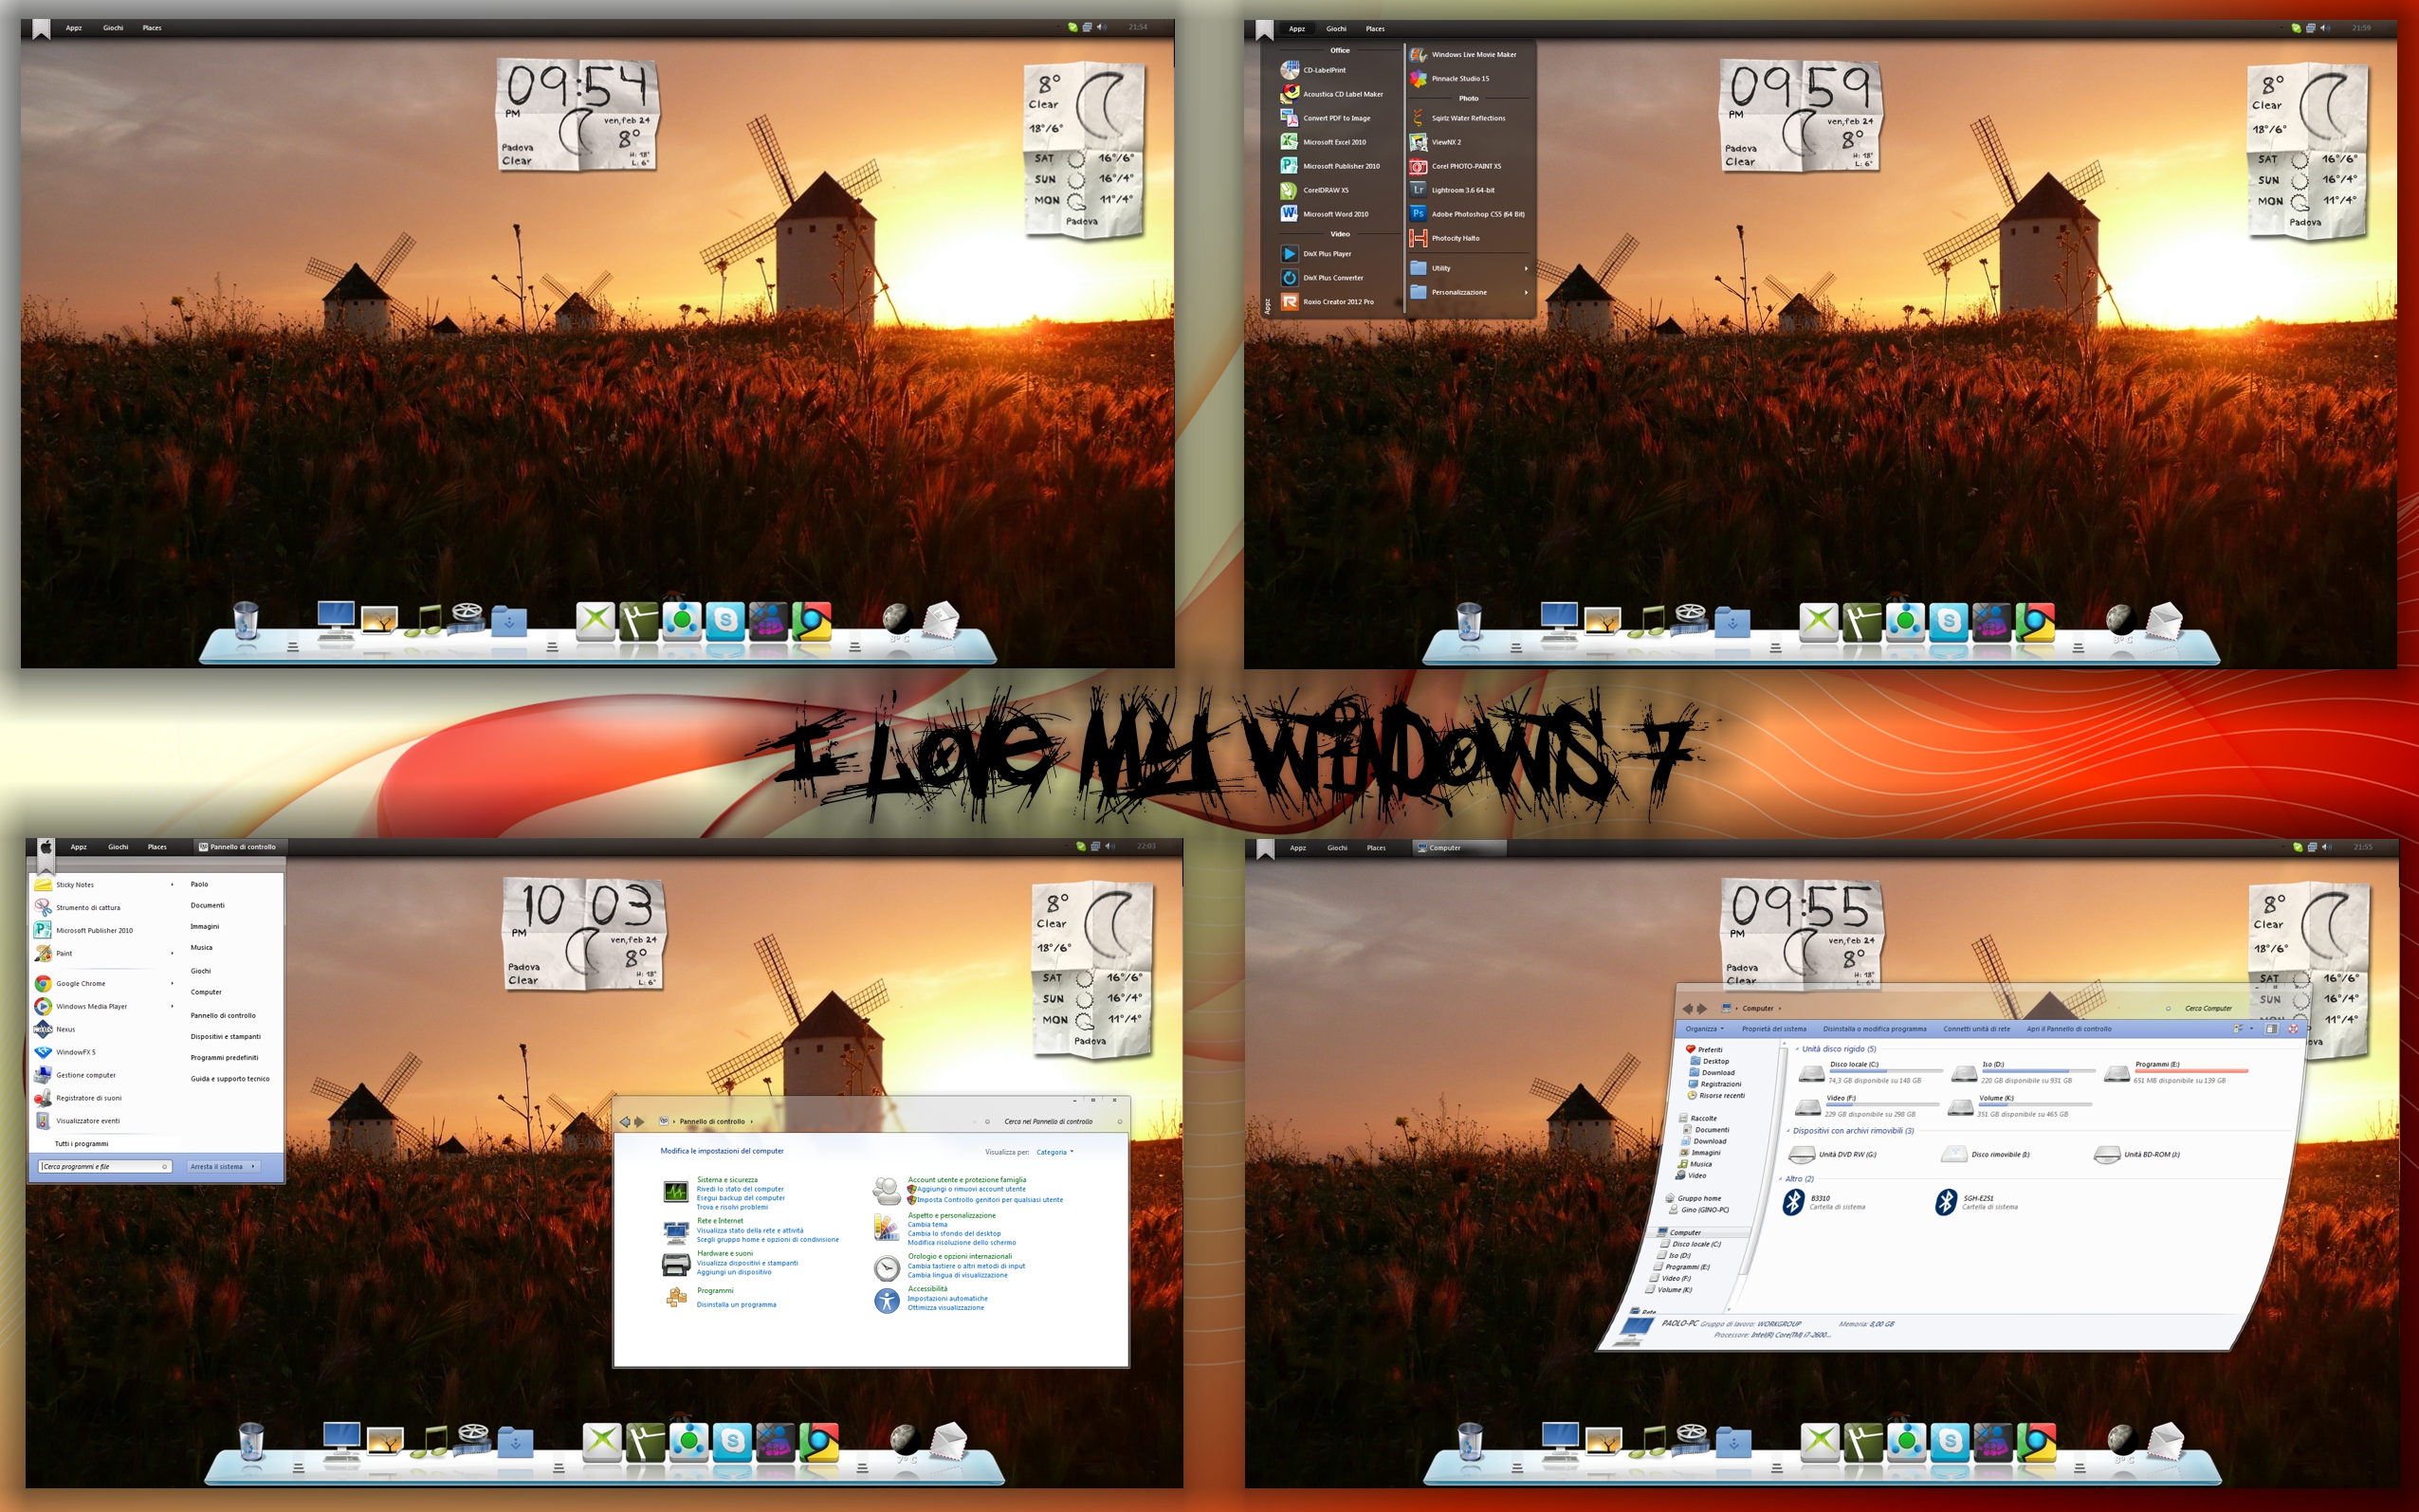 I love My Windows 7